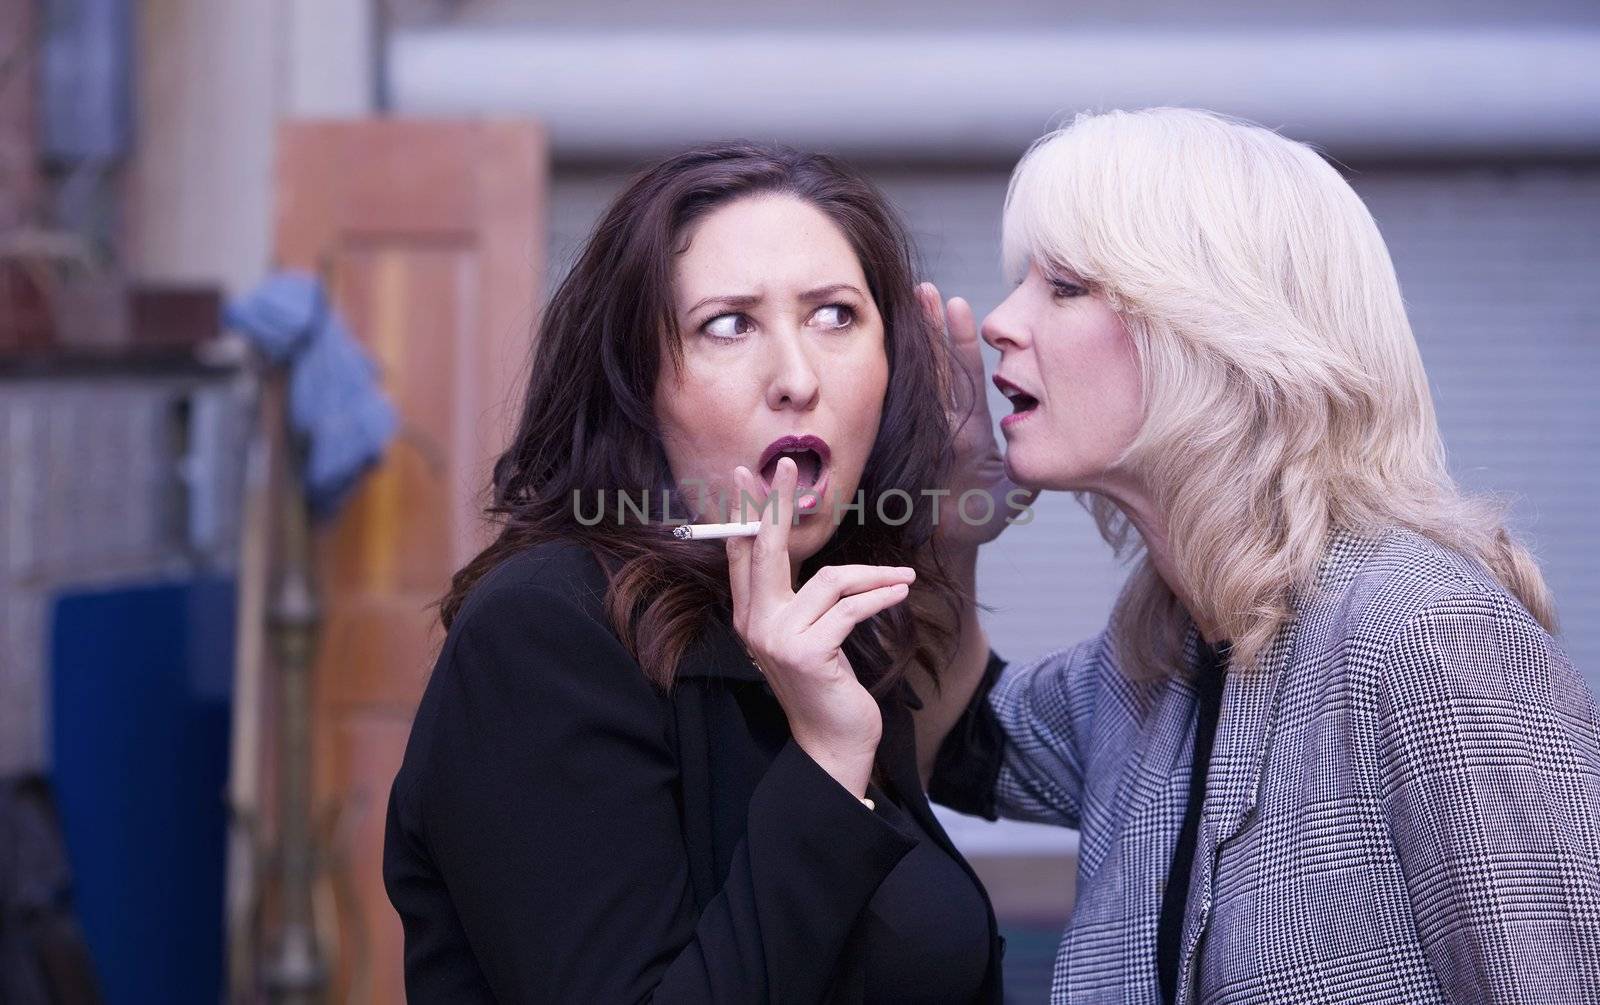 Two women engaging in gossip during a smoking break